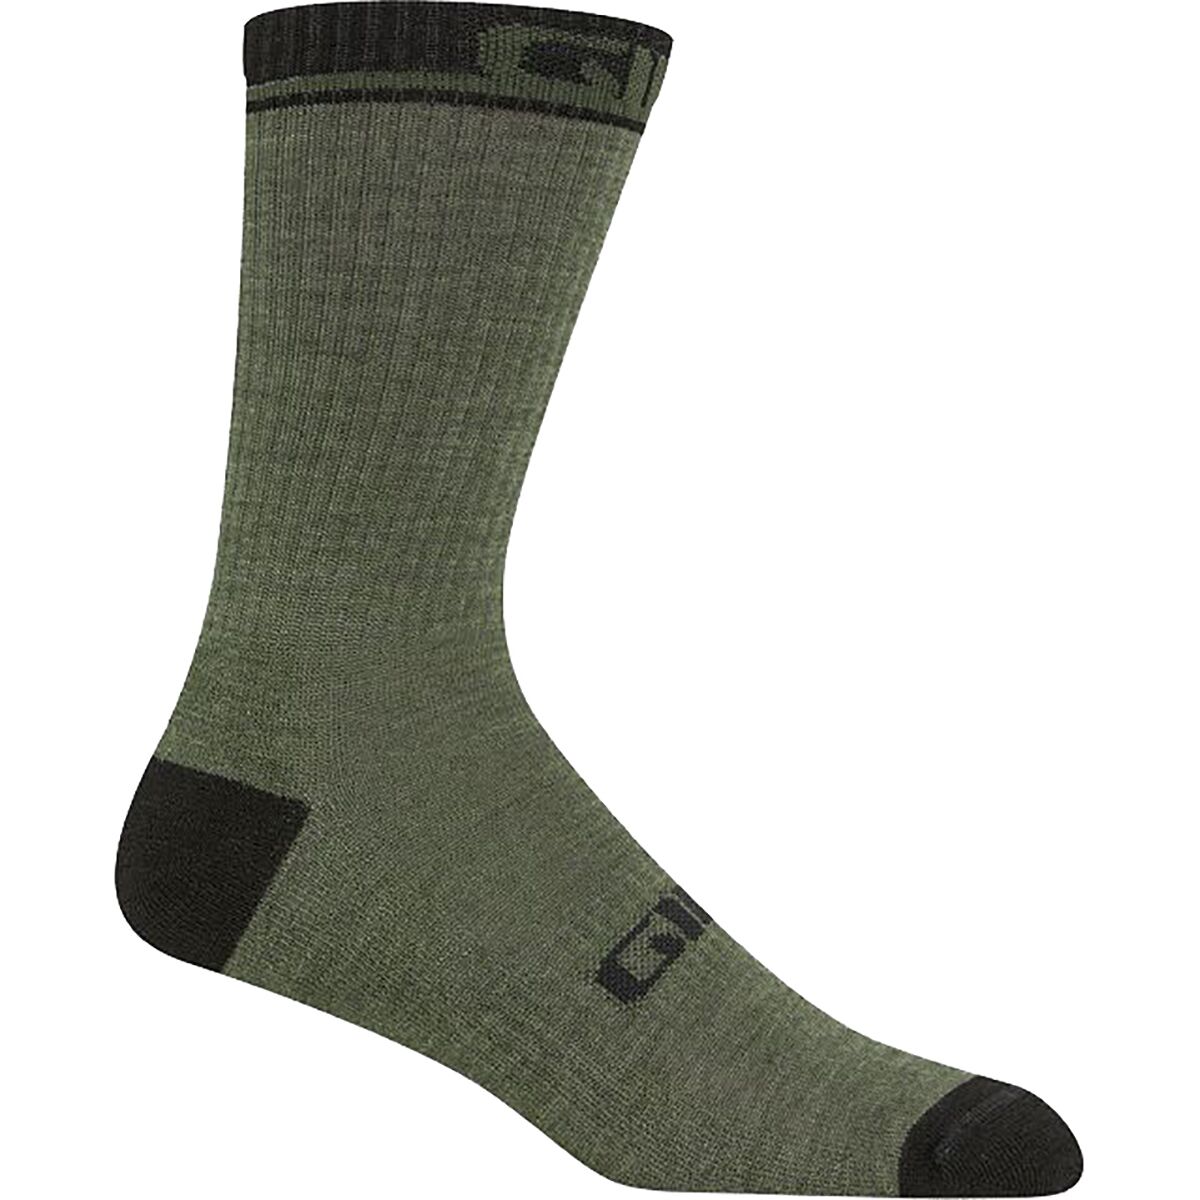 Giro Merino Winter Sock Olive, XL - Men's